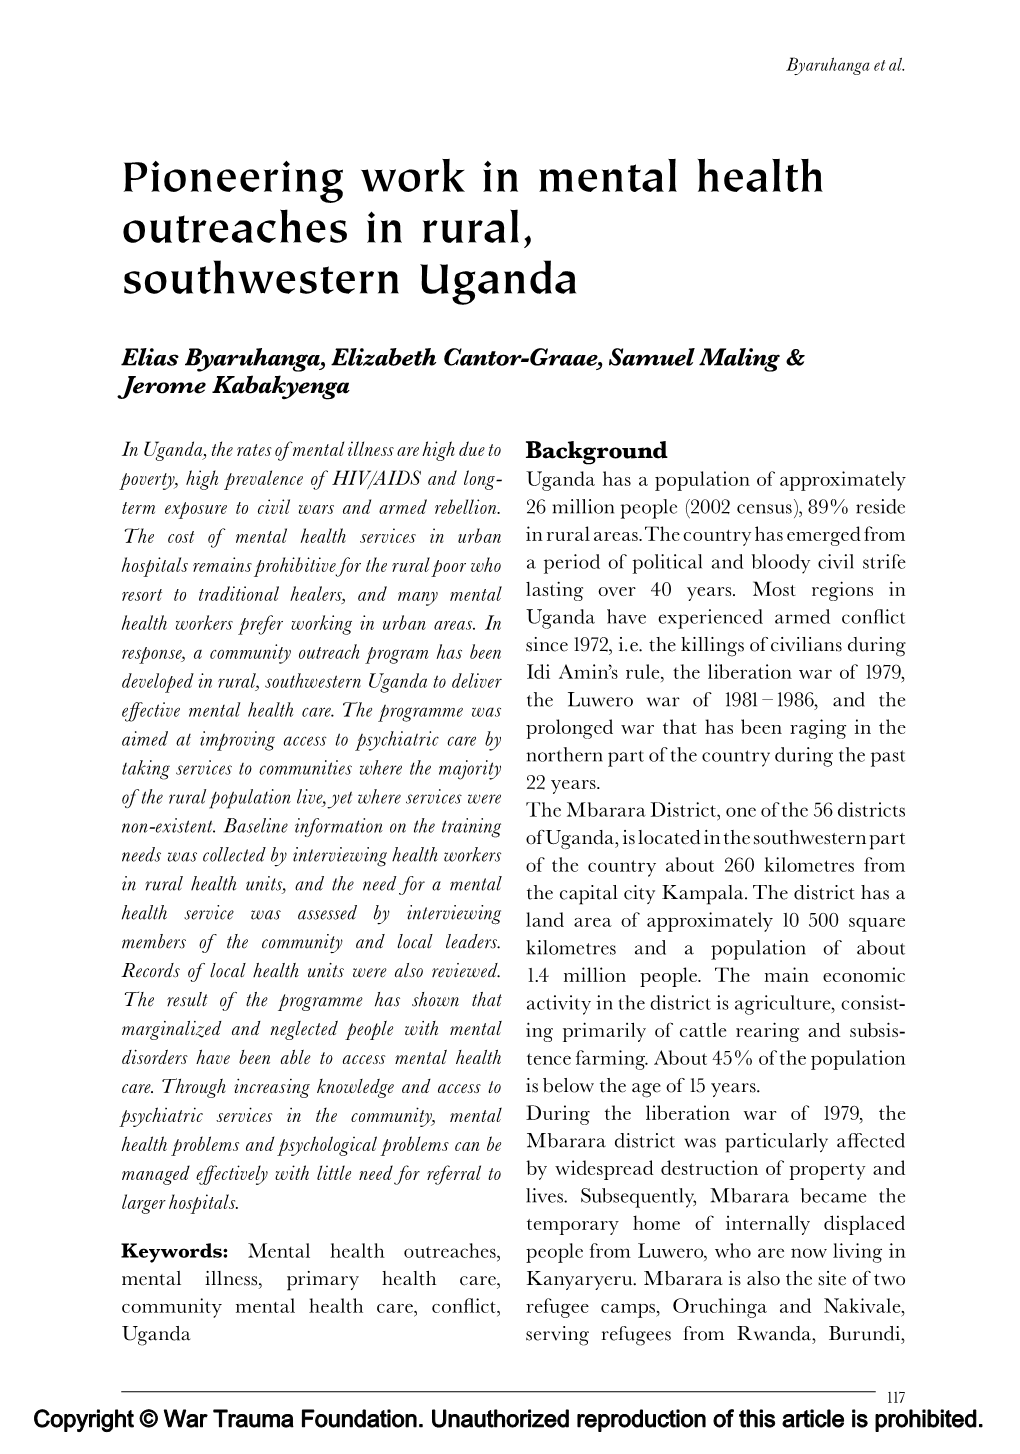 Pioneering Work in Mental Health Outreaches in Rural, Southwestern Uganda